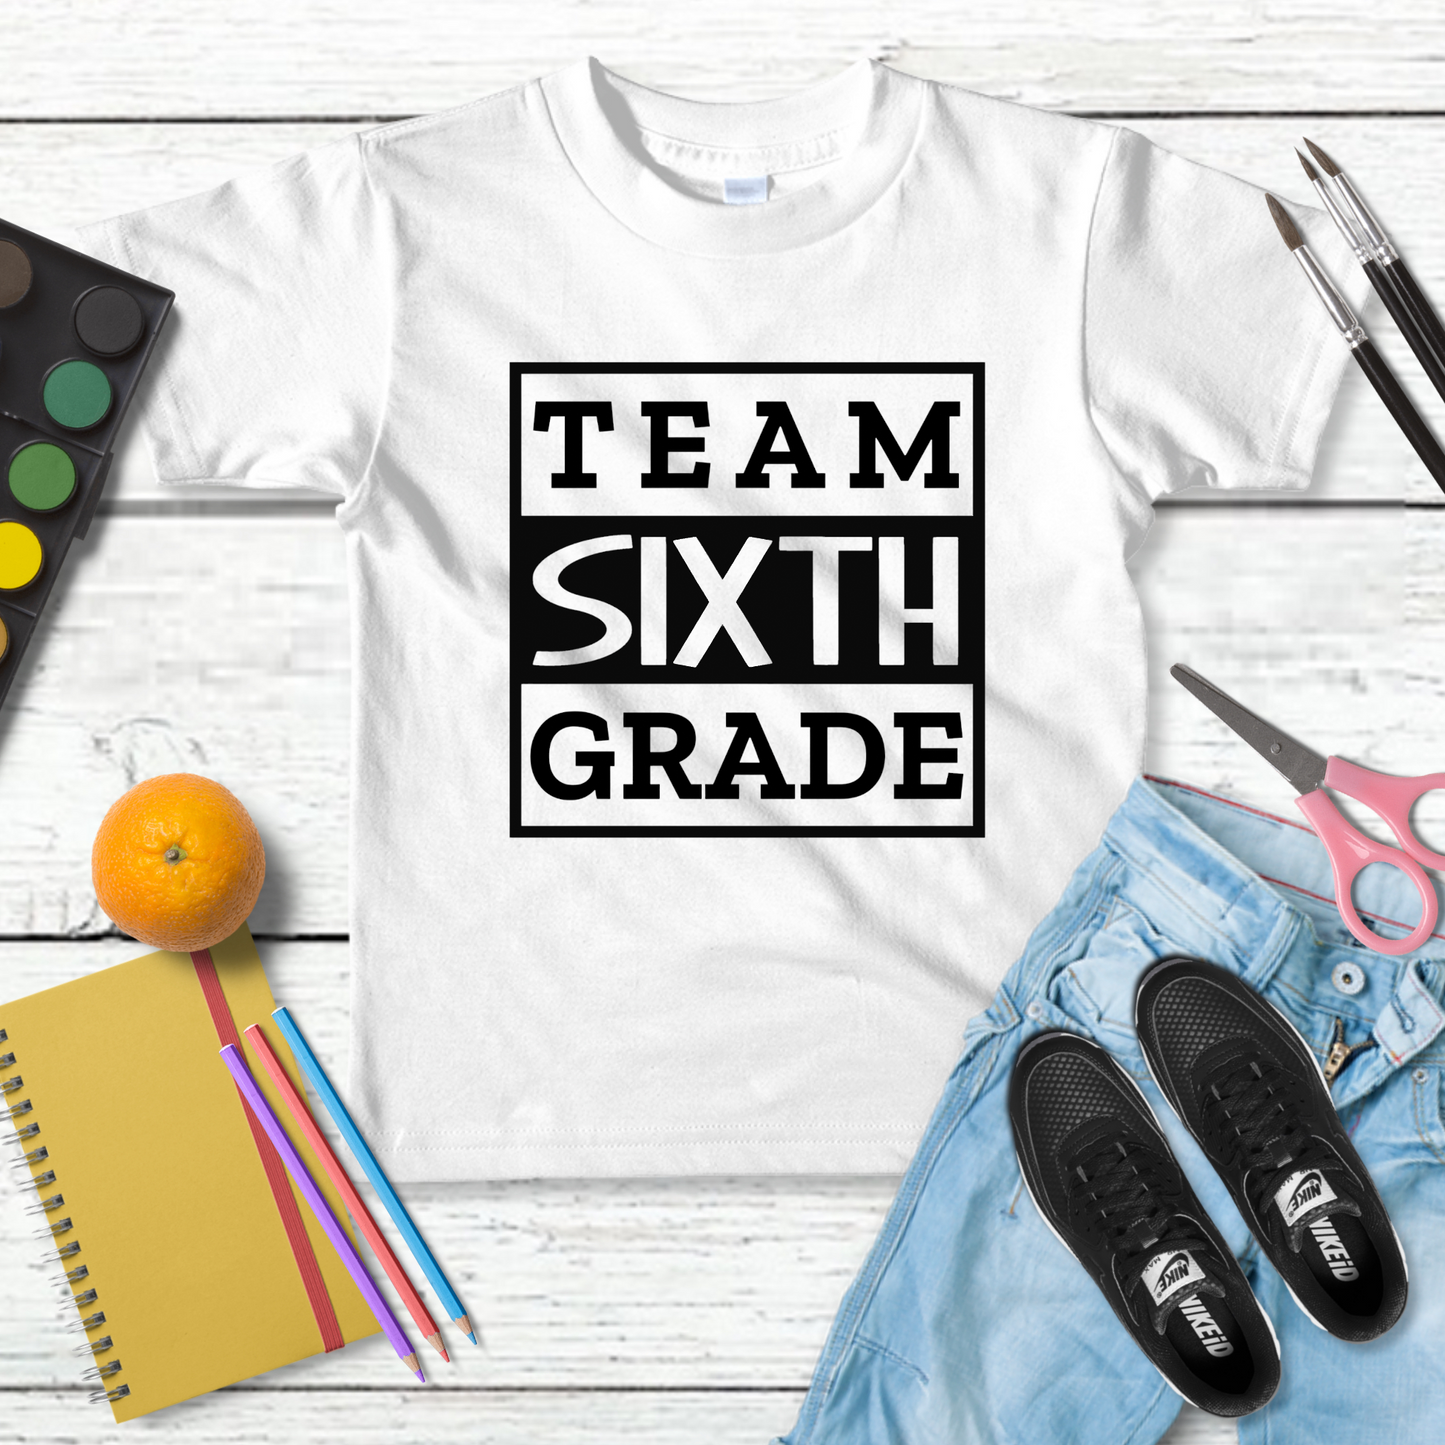 Team Sixth Grade Adult Cotton T-shirt